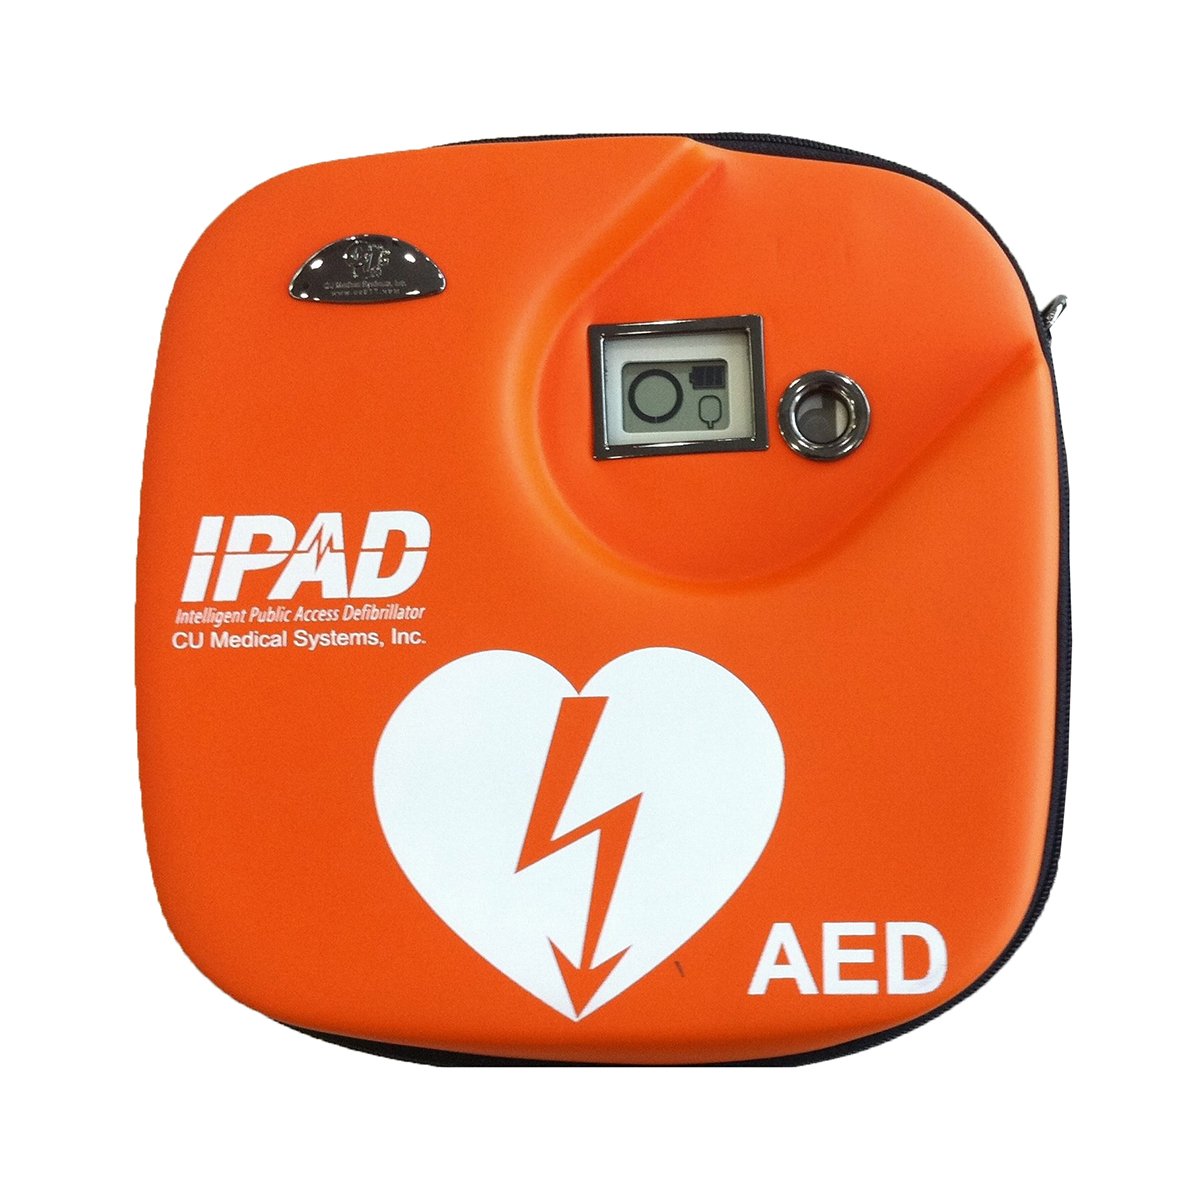 iPAD SP1 (AED) Semi-Automatic Defibrillator